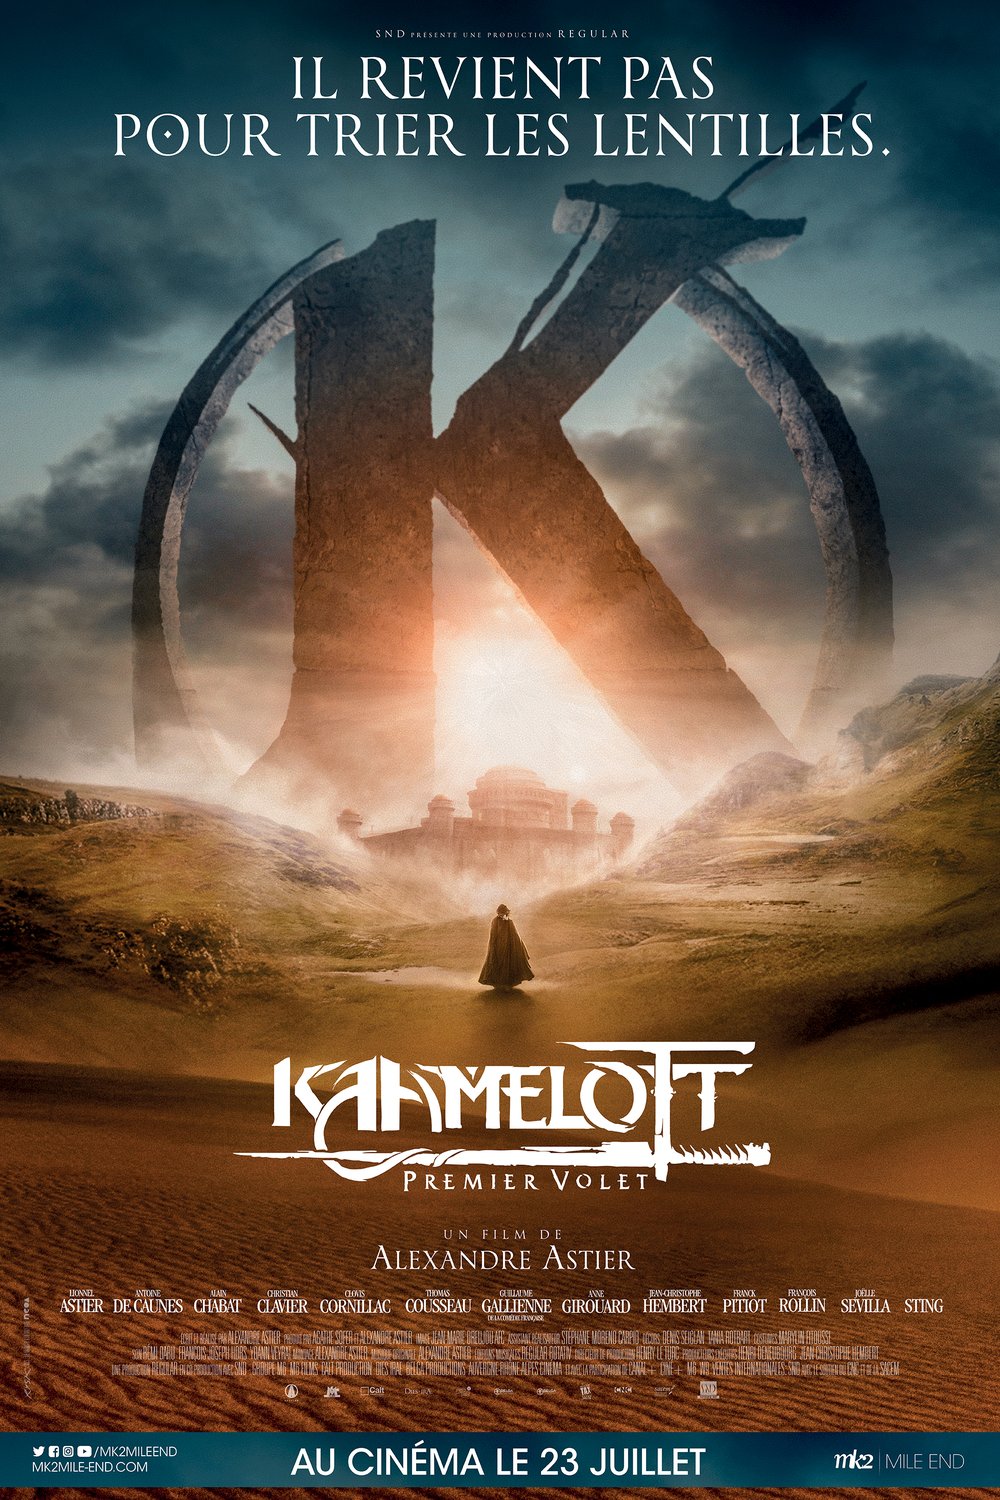 Poster of the movie Kaamelott - Premier volet